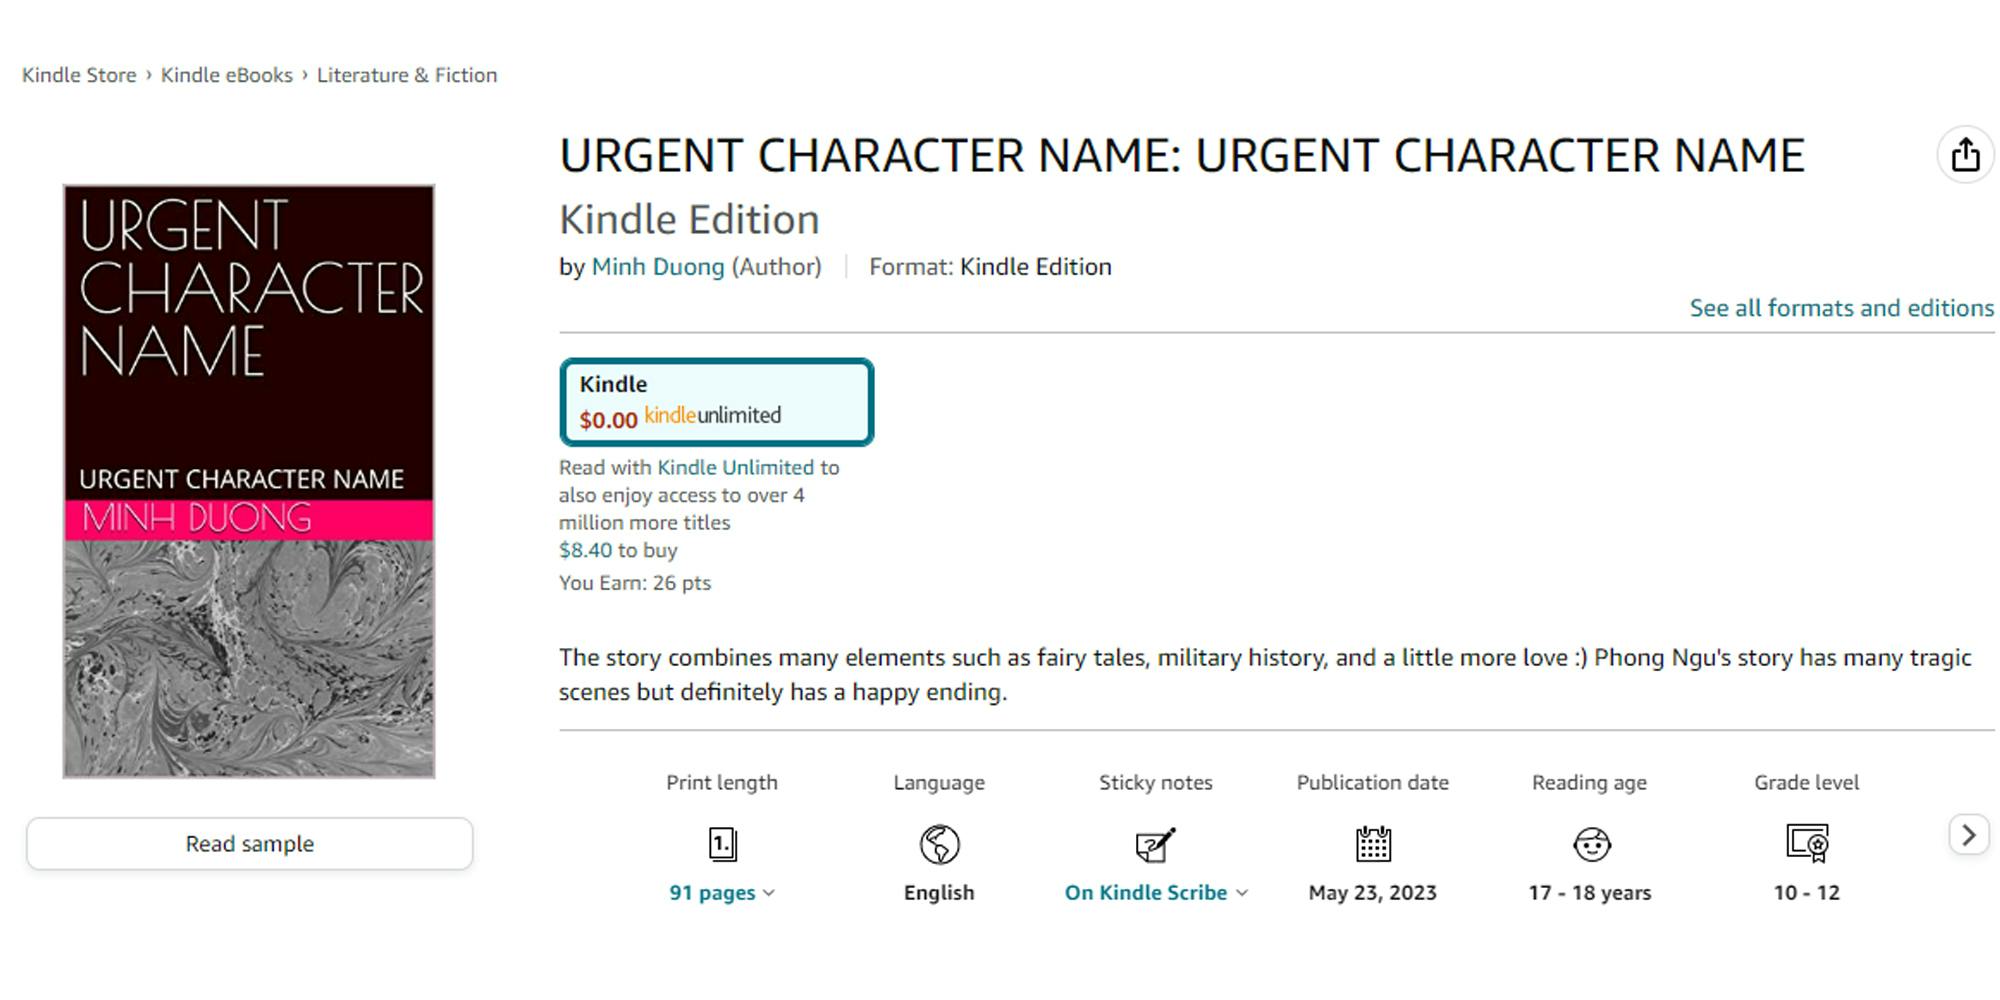 Amazon Kindle eBook listing "URGENT CHARACTER NAME: URGENT CHARACTER NAME" with image of book cover